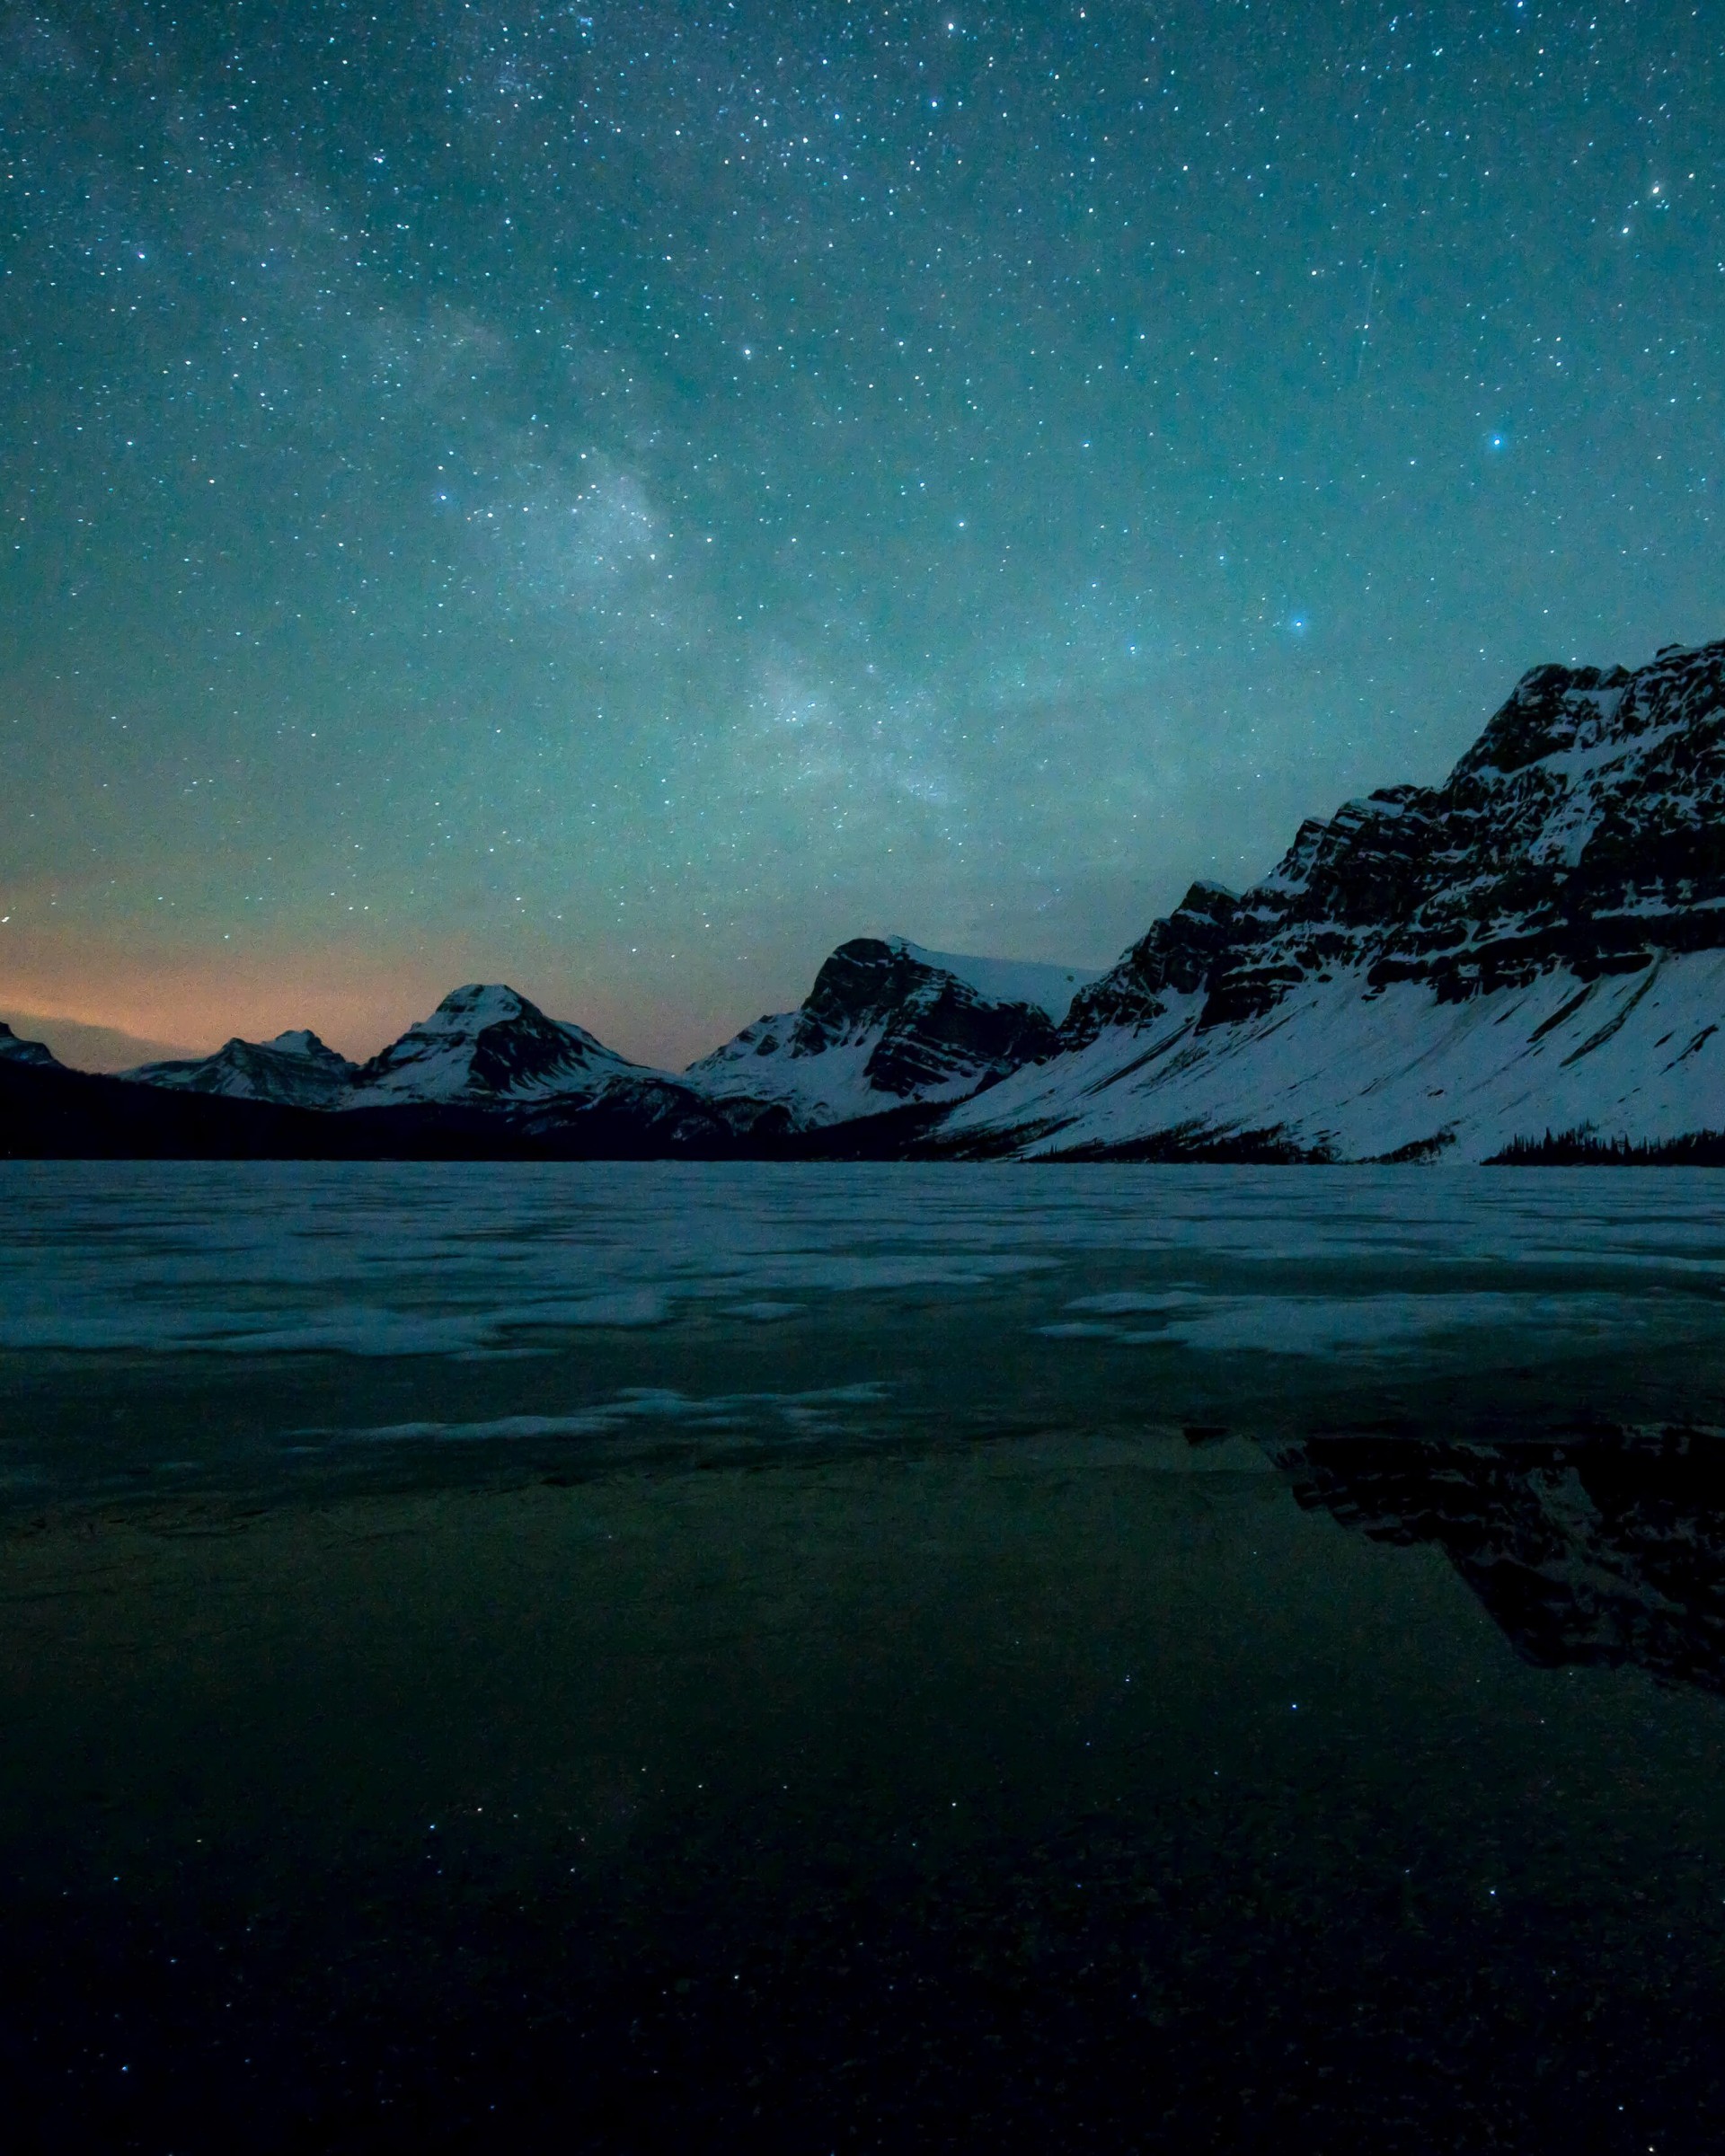 Milky Way over Bow Lake, Alberta, Canada Wallpaper for Google Nexus 7